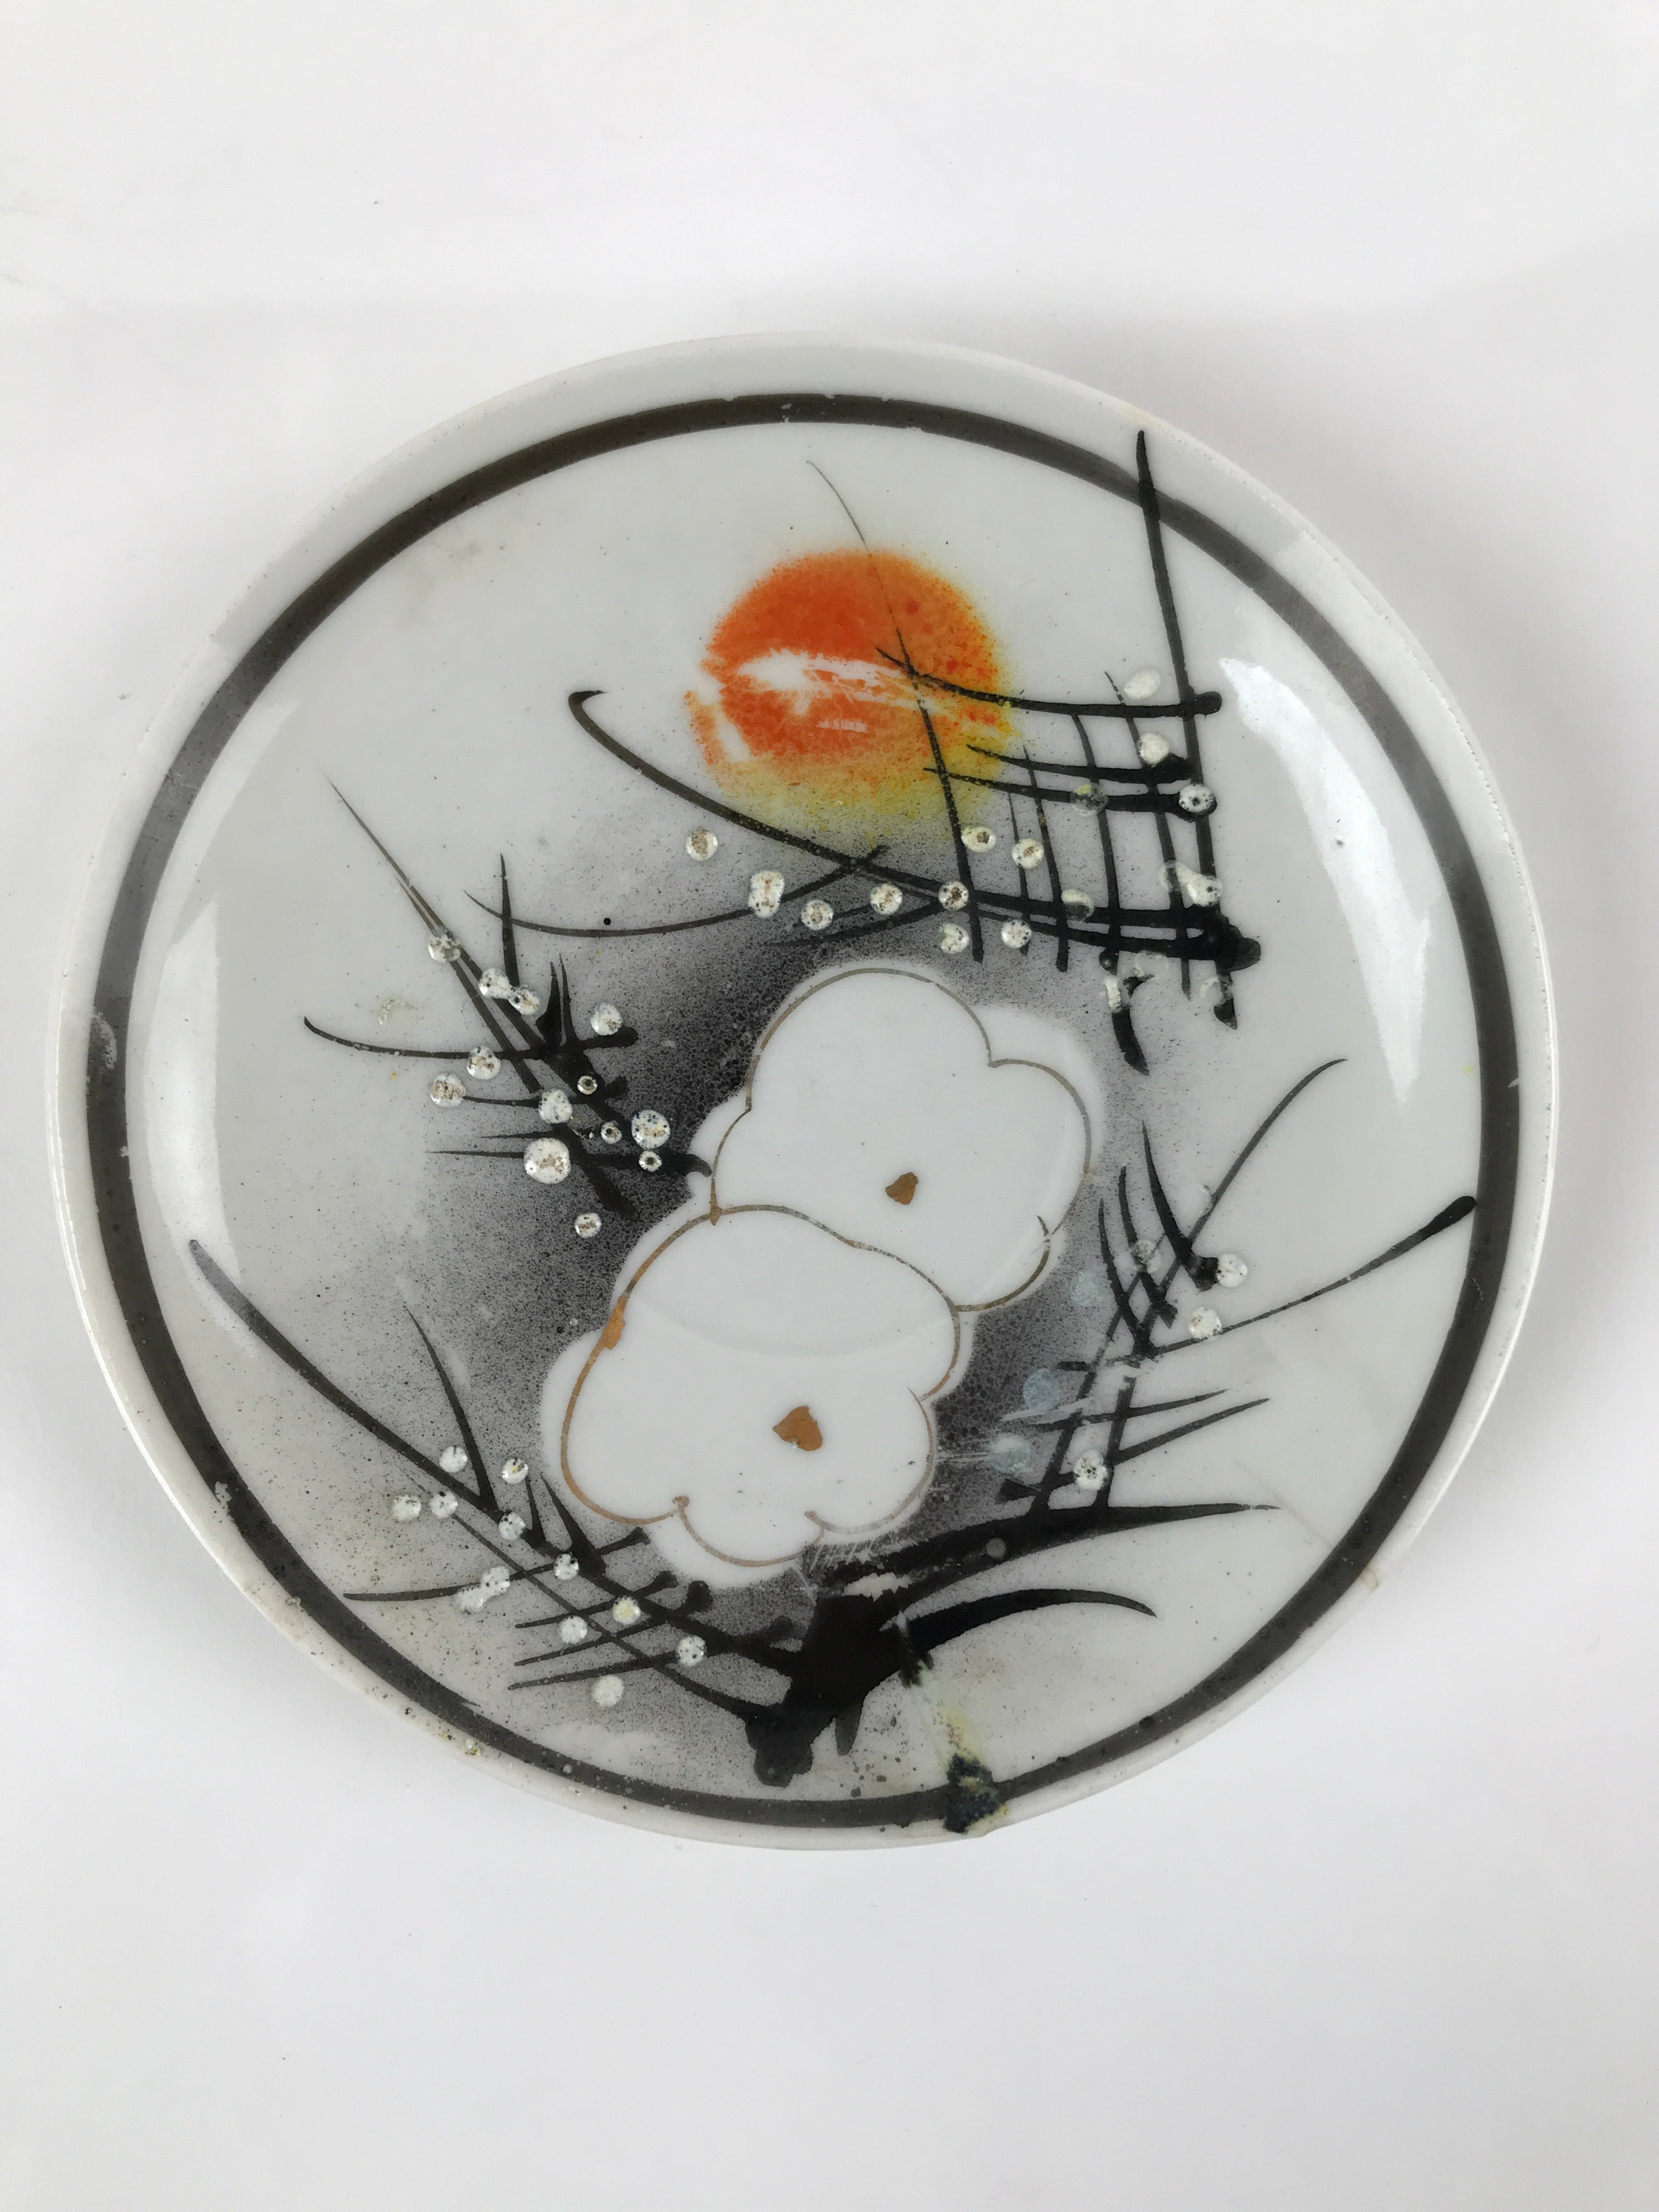 Japanese Porcelain Small Plate Kozara Vtg Plum Blossom Sun Black White PY685